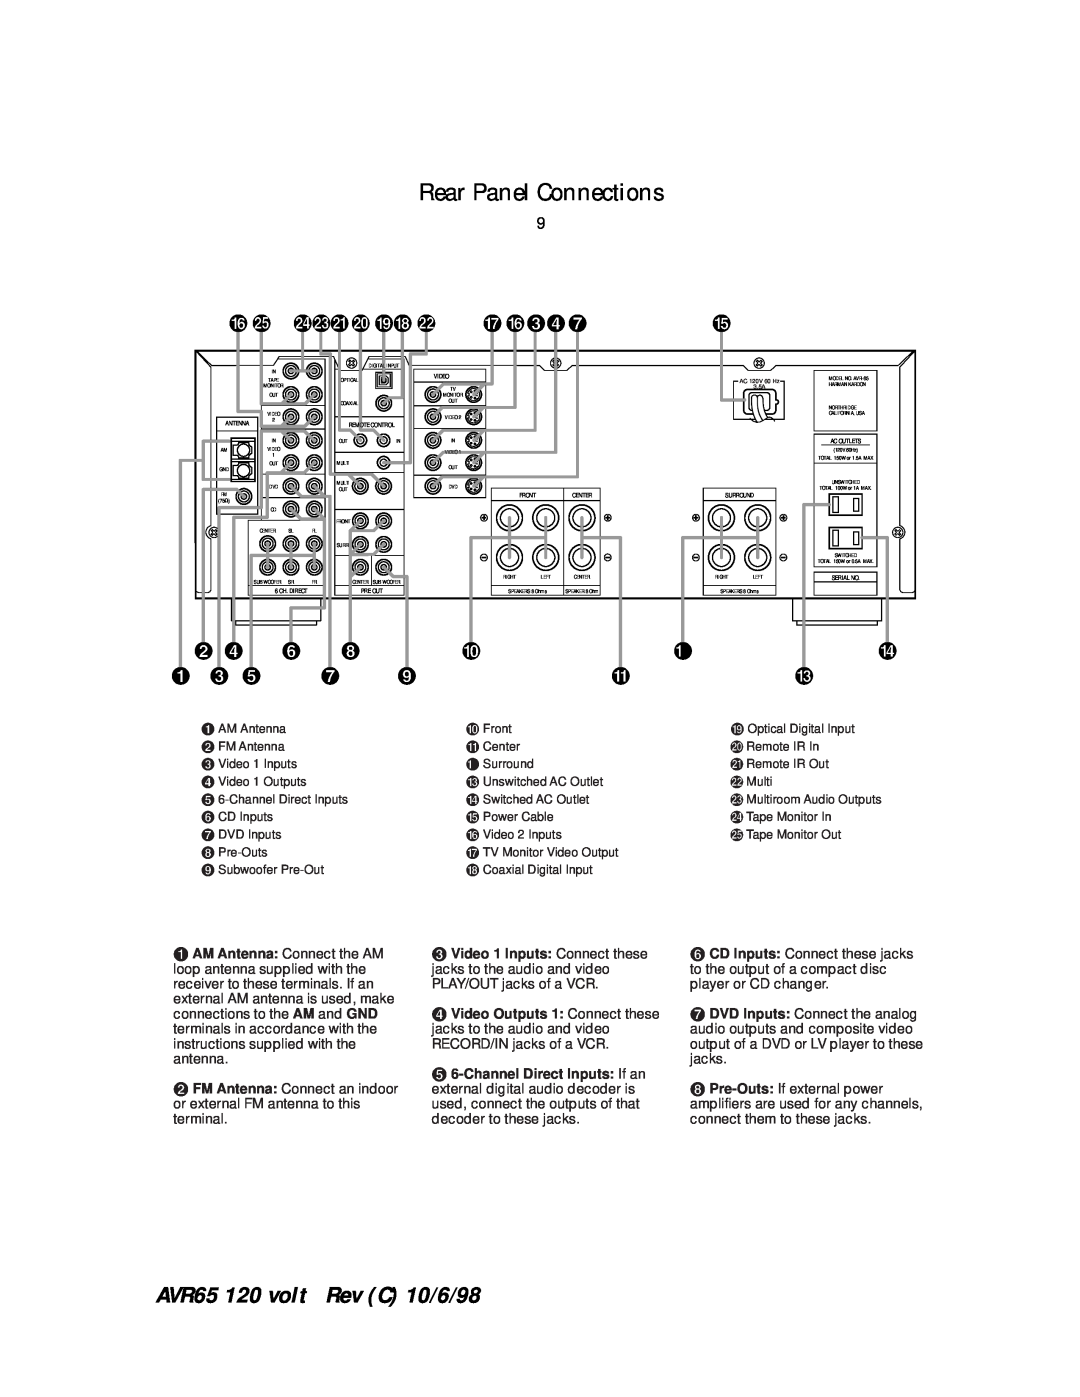 Harman-Kardon manual Rear Panel Connections, AVR65 120 volt Rev C 10/6/98, ß f edba á¡ c à ß£¢, ª ¢ ¤, âÛ Ú 